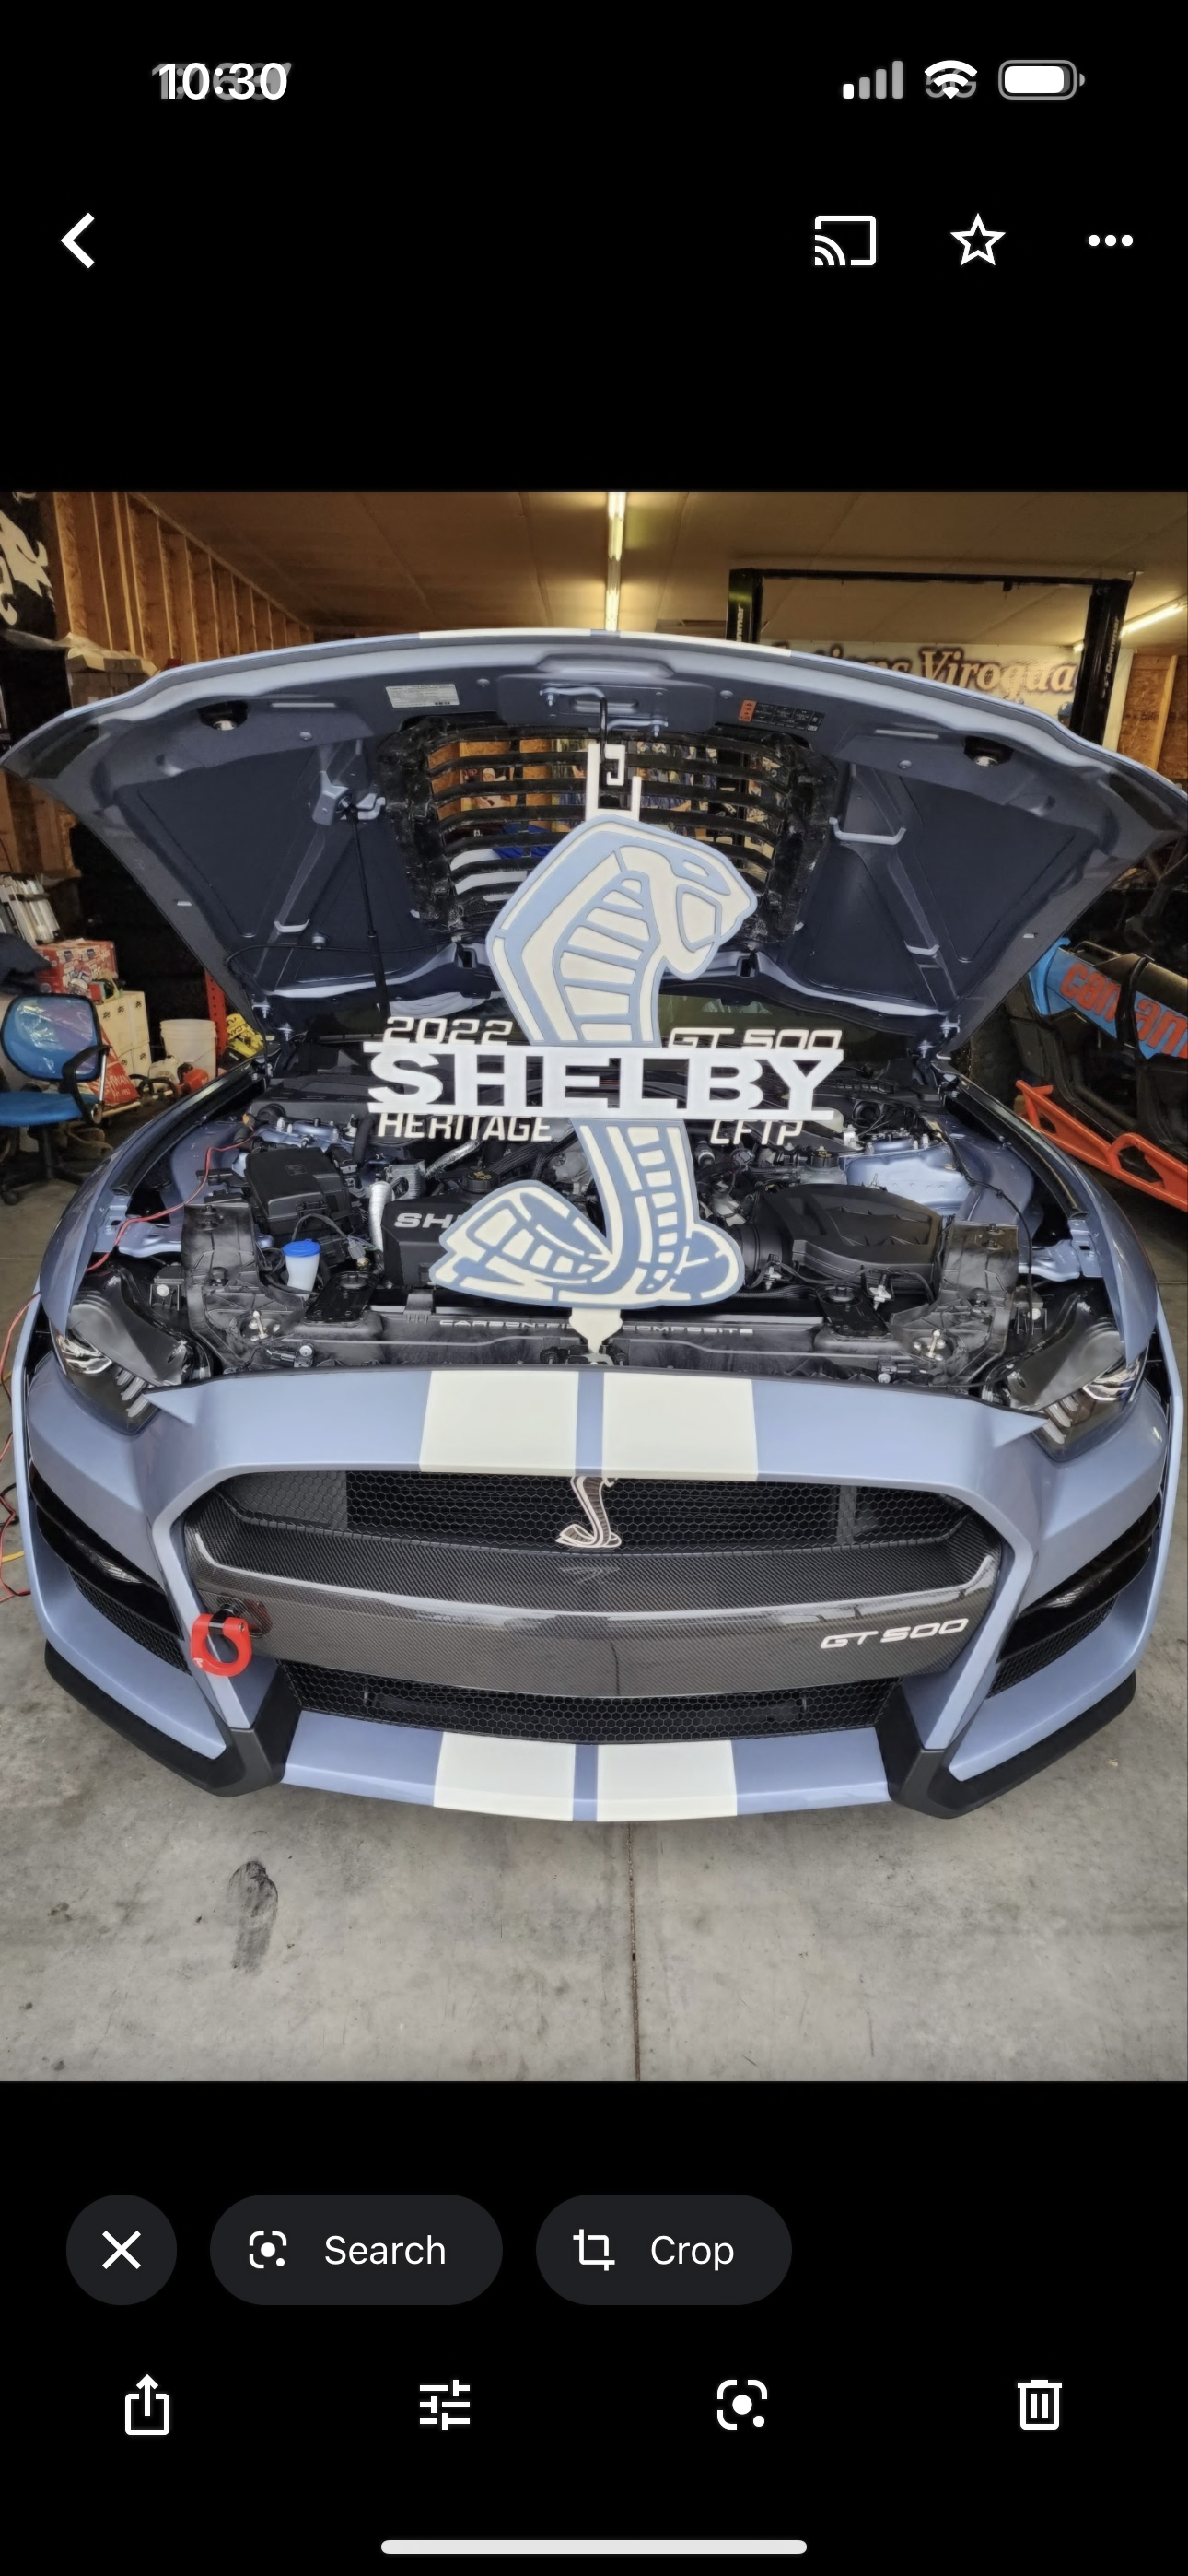 Shelby heritage edition gt350 hood prop, blue metallic